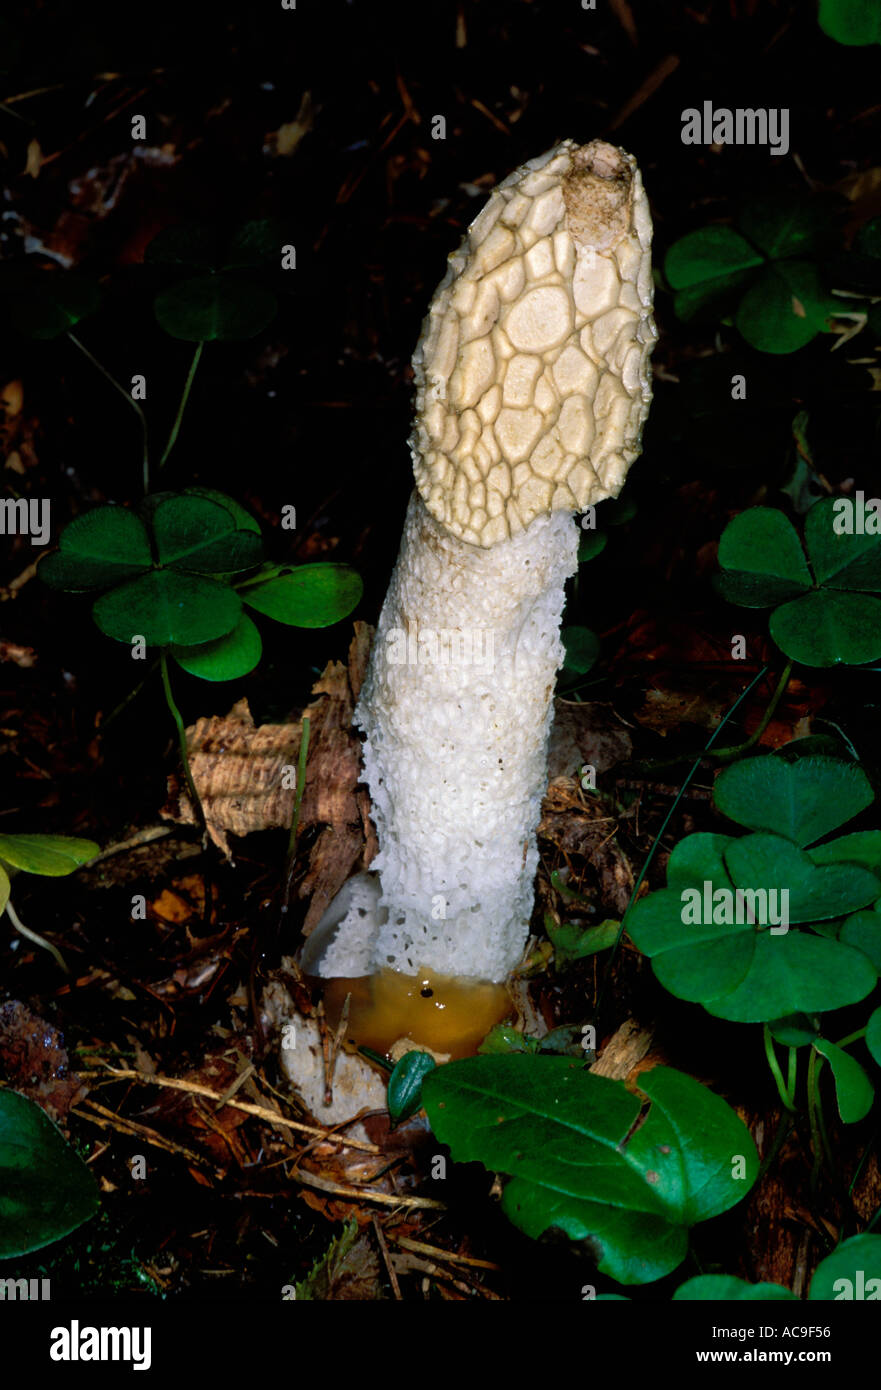 Common Stinkhorn Fungus, Phallus impudicus. Fruiting body on forest ground Stock Photo